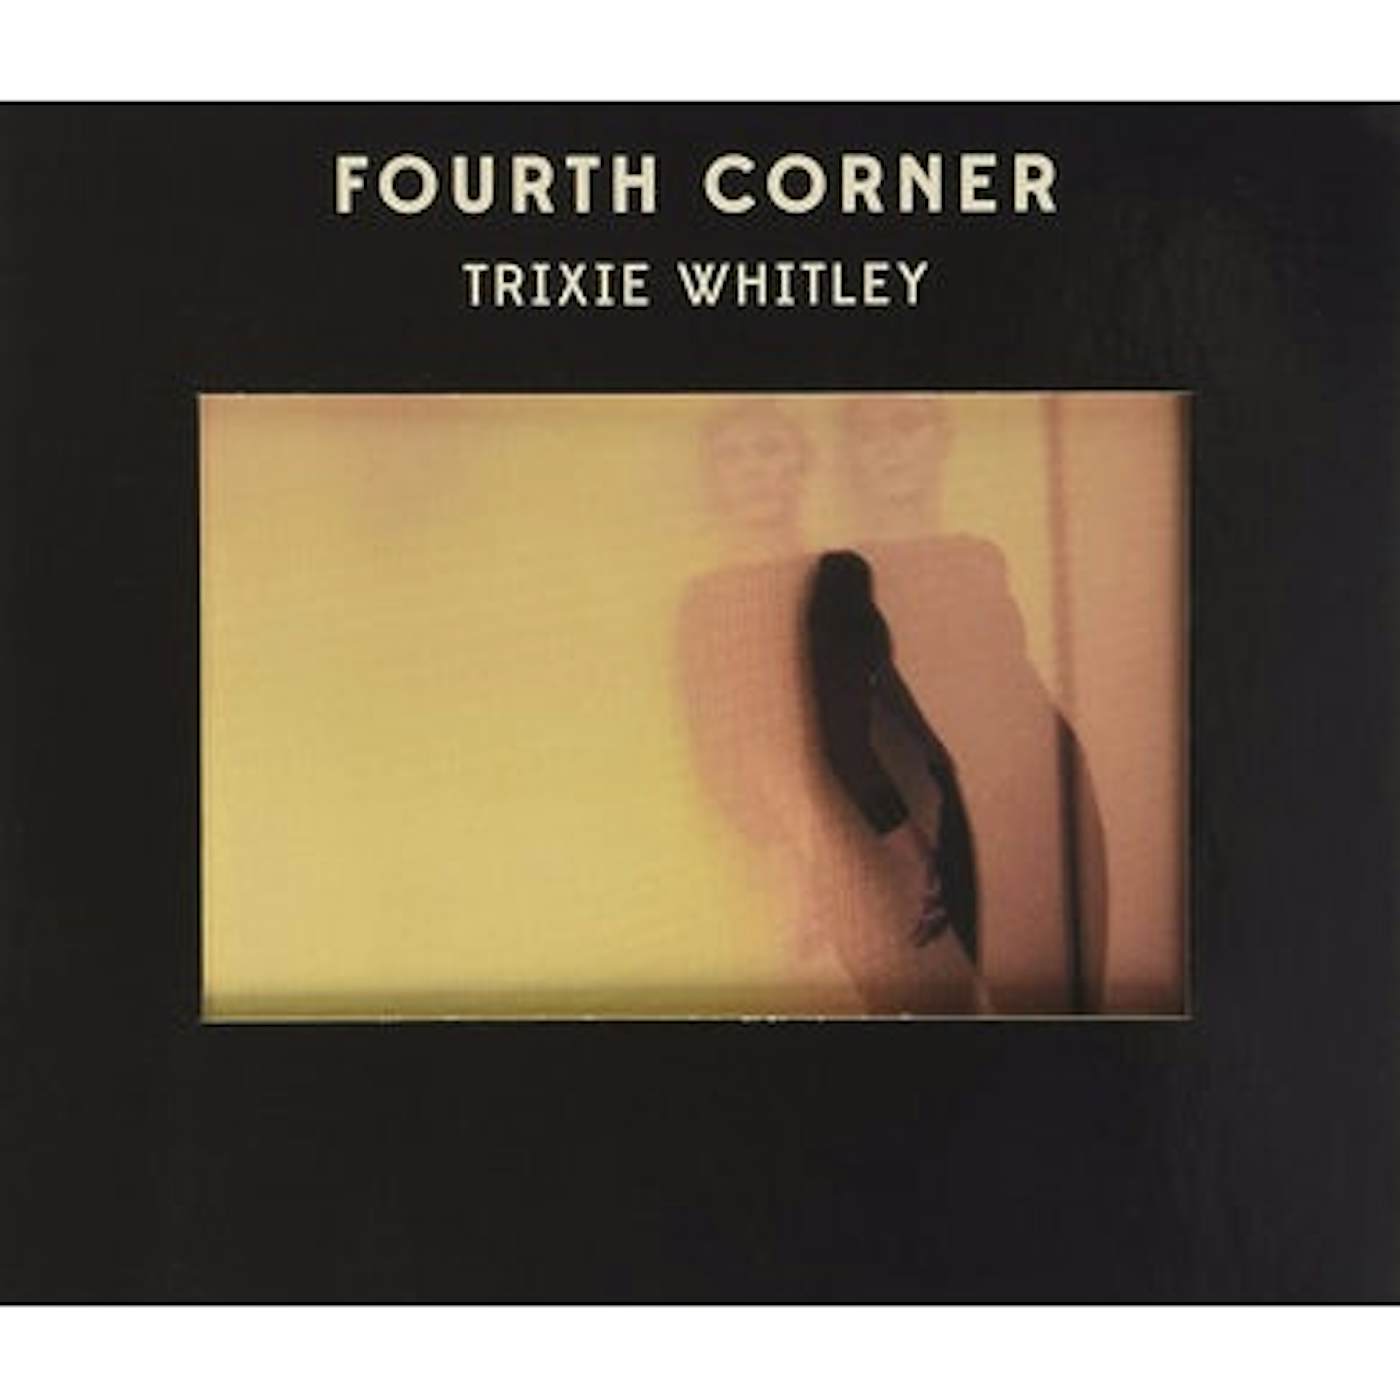 Trixie Whitley FOURTH CORNER (FRA) (Vinyl)